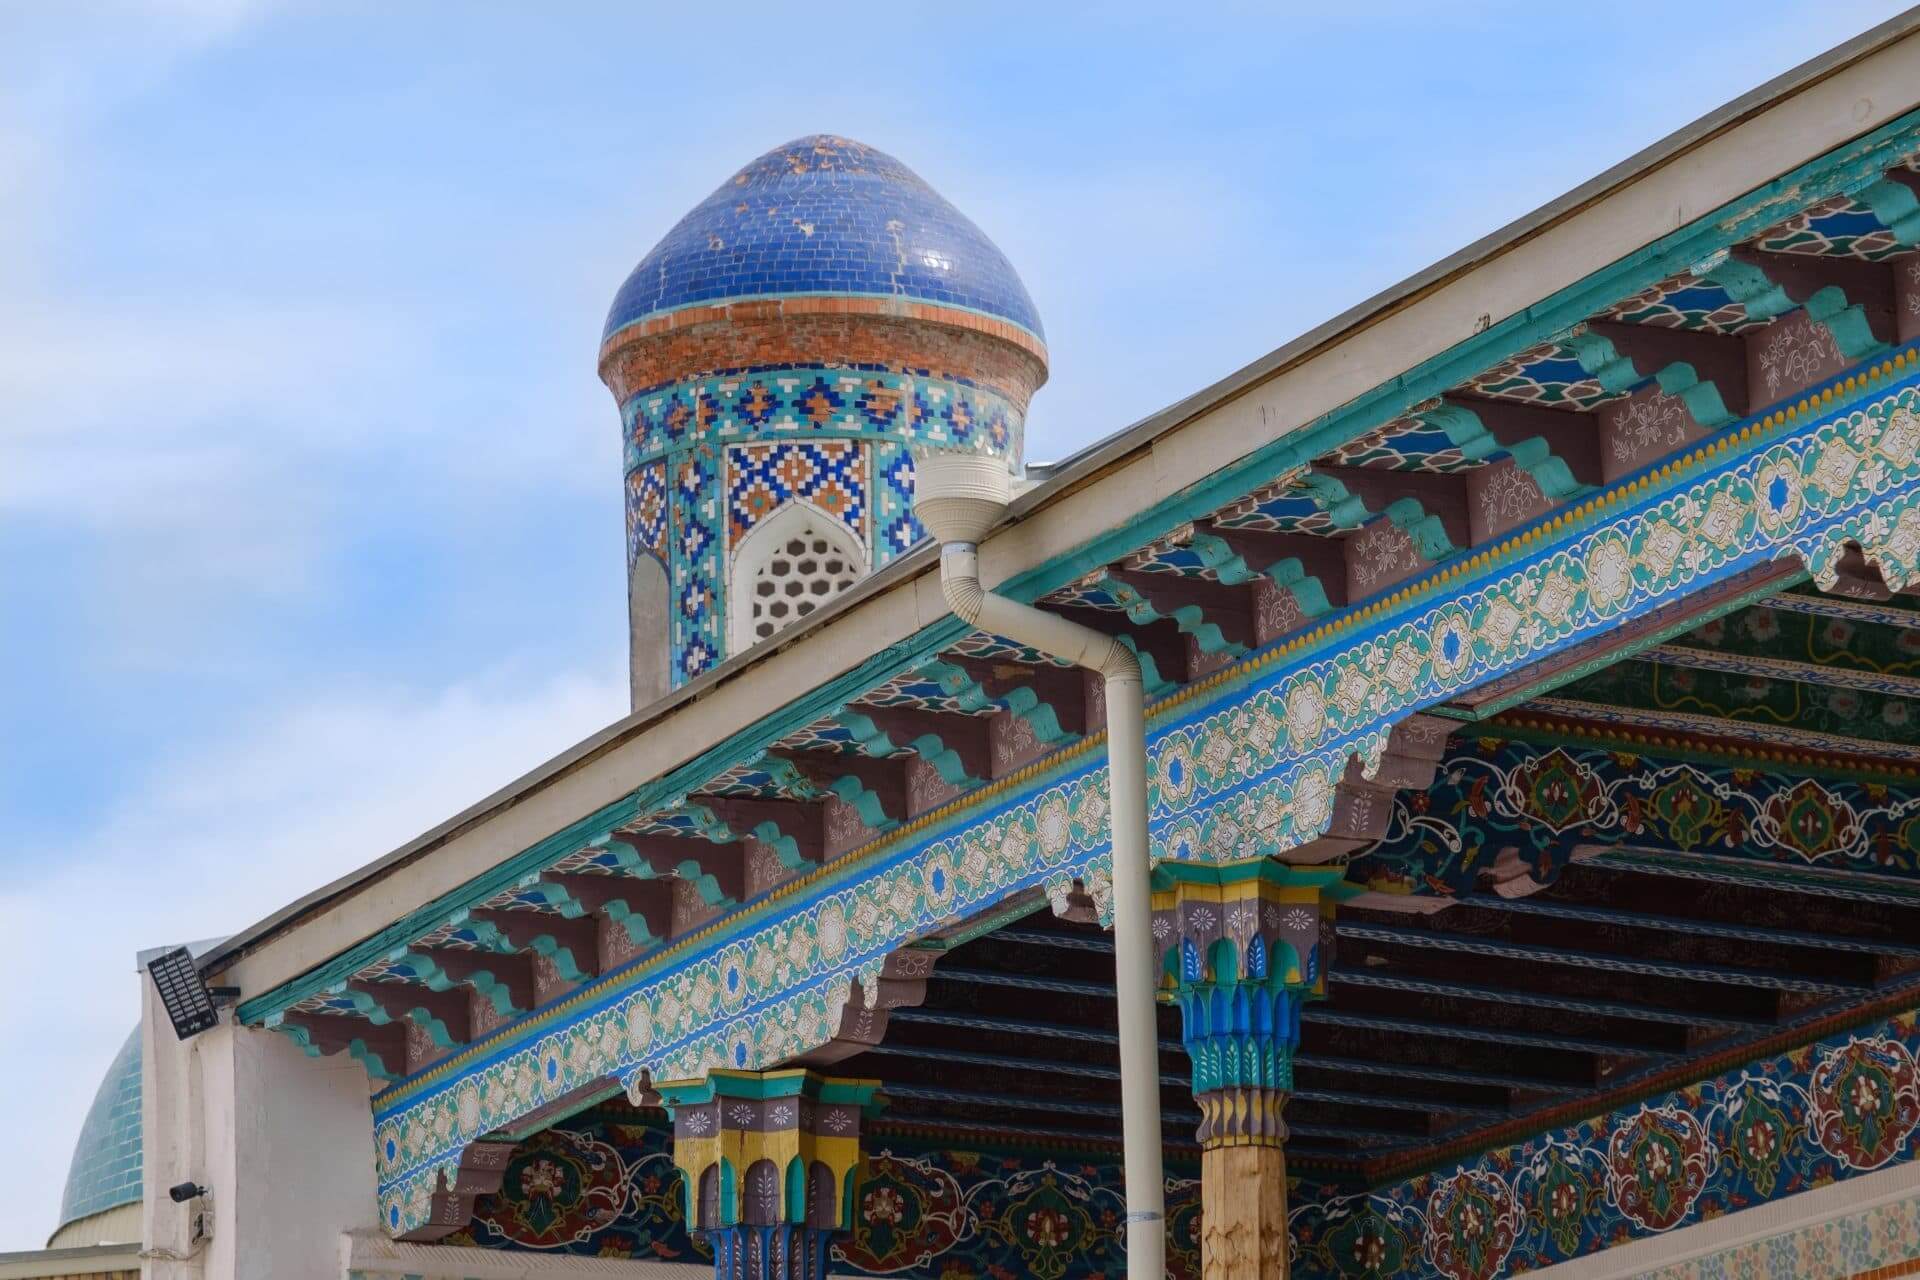 Uzbekistan Jewish heritage tours, a mosaic tile covered building in Uzbekistan.